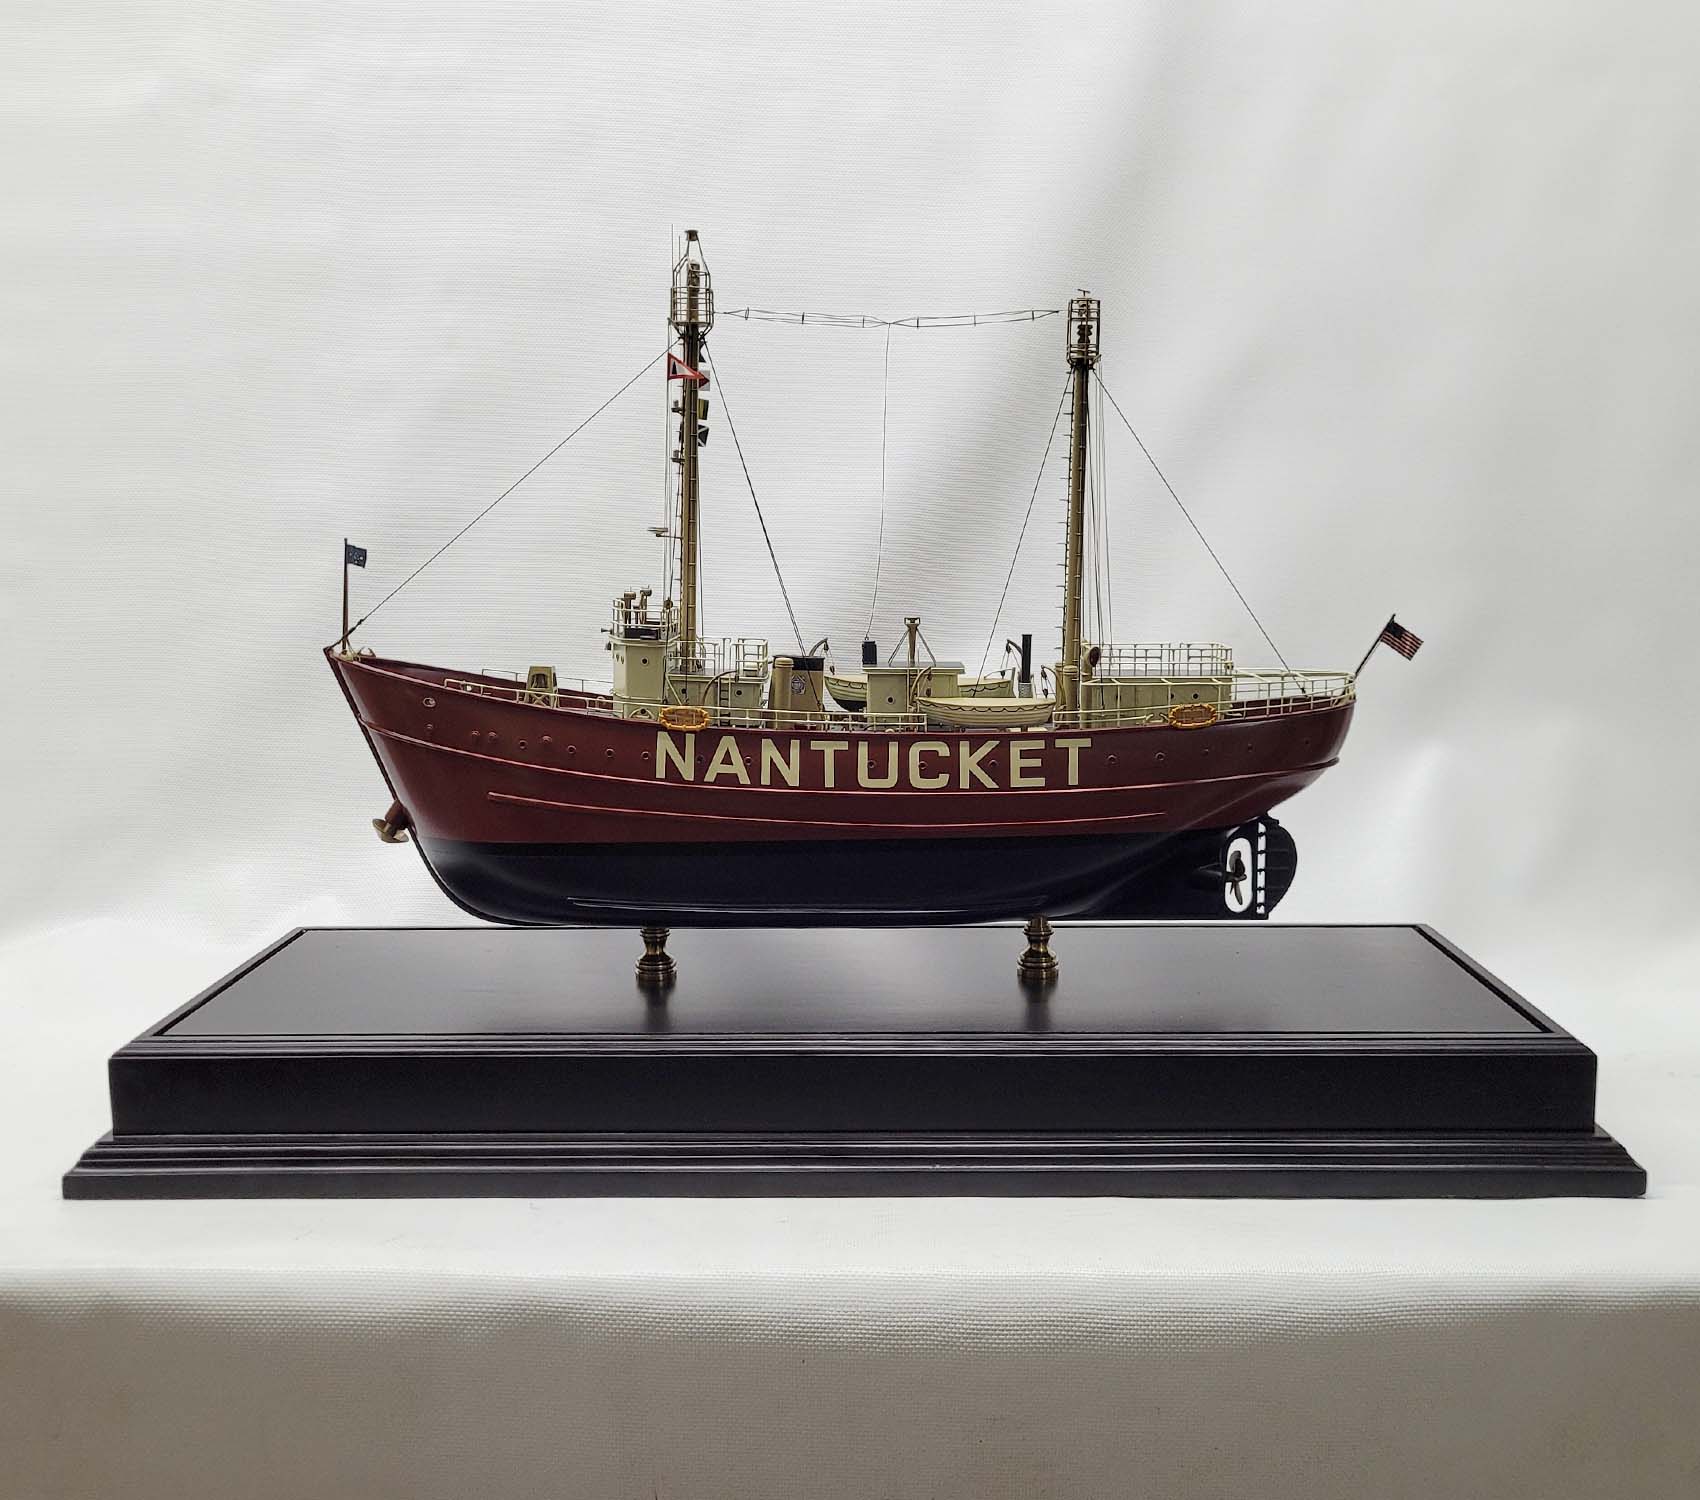 Nantucket Lightship LV-112 [07/23/22]